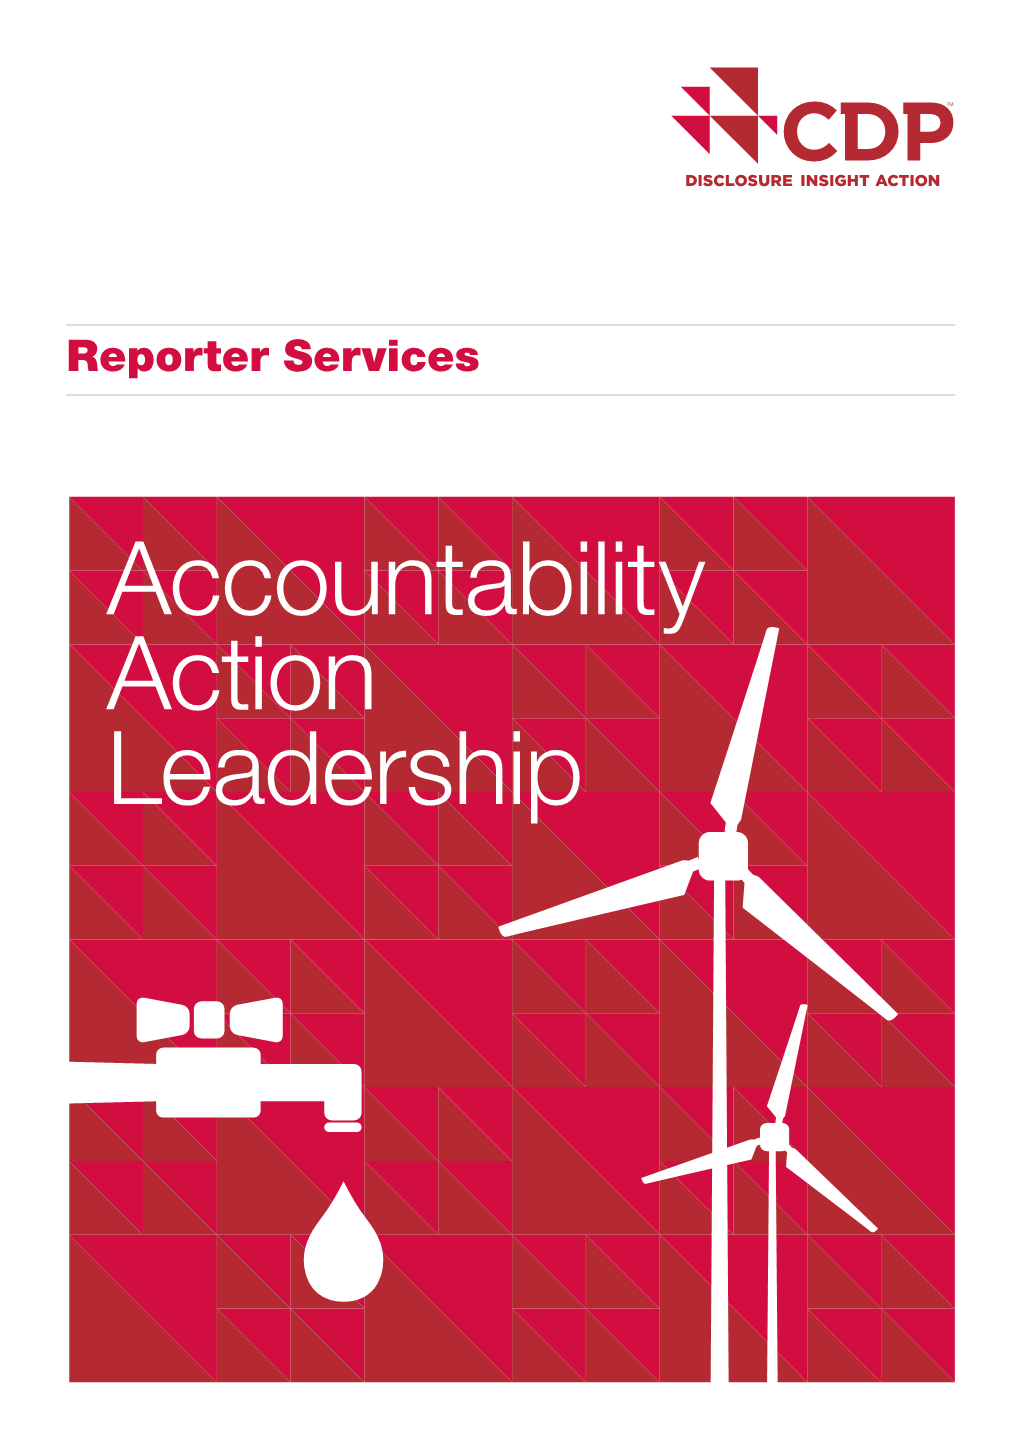 Accountability Action Leadership How Can CDP Help?